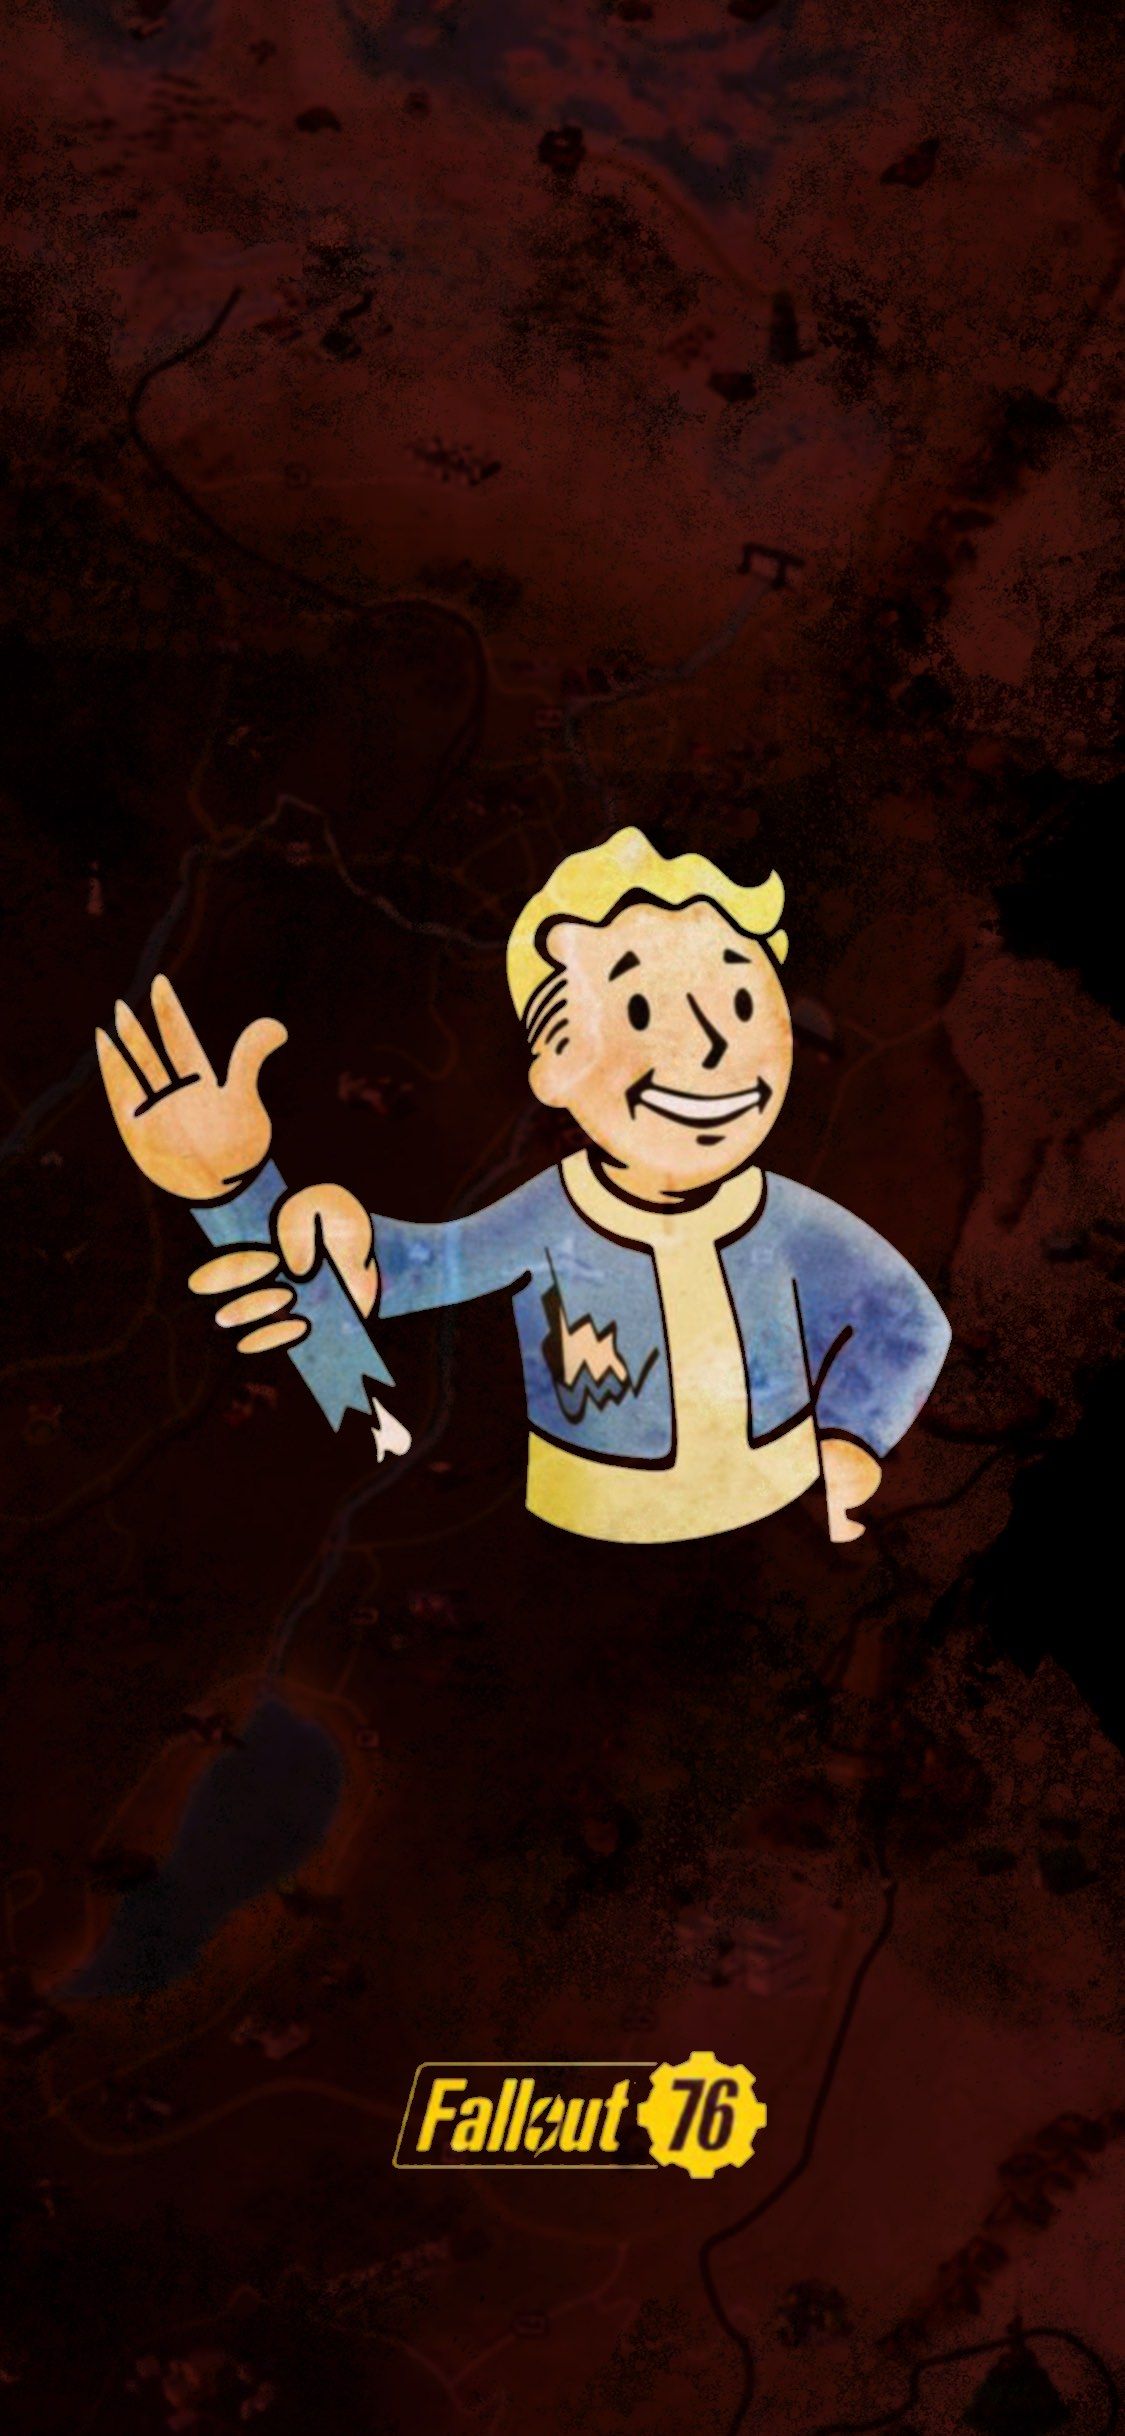 Fallout 76 iPhone X wallpaper